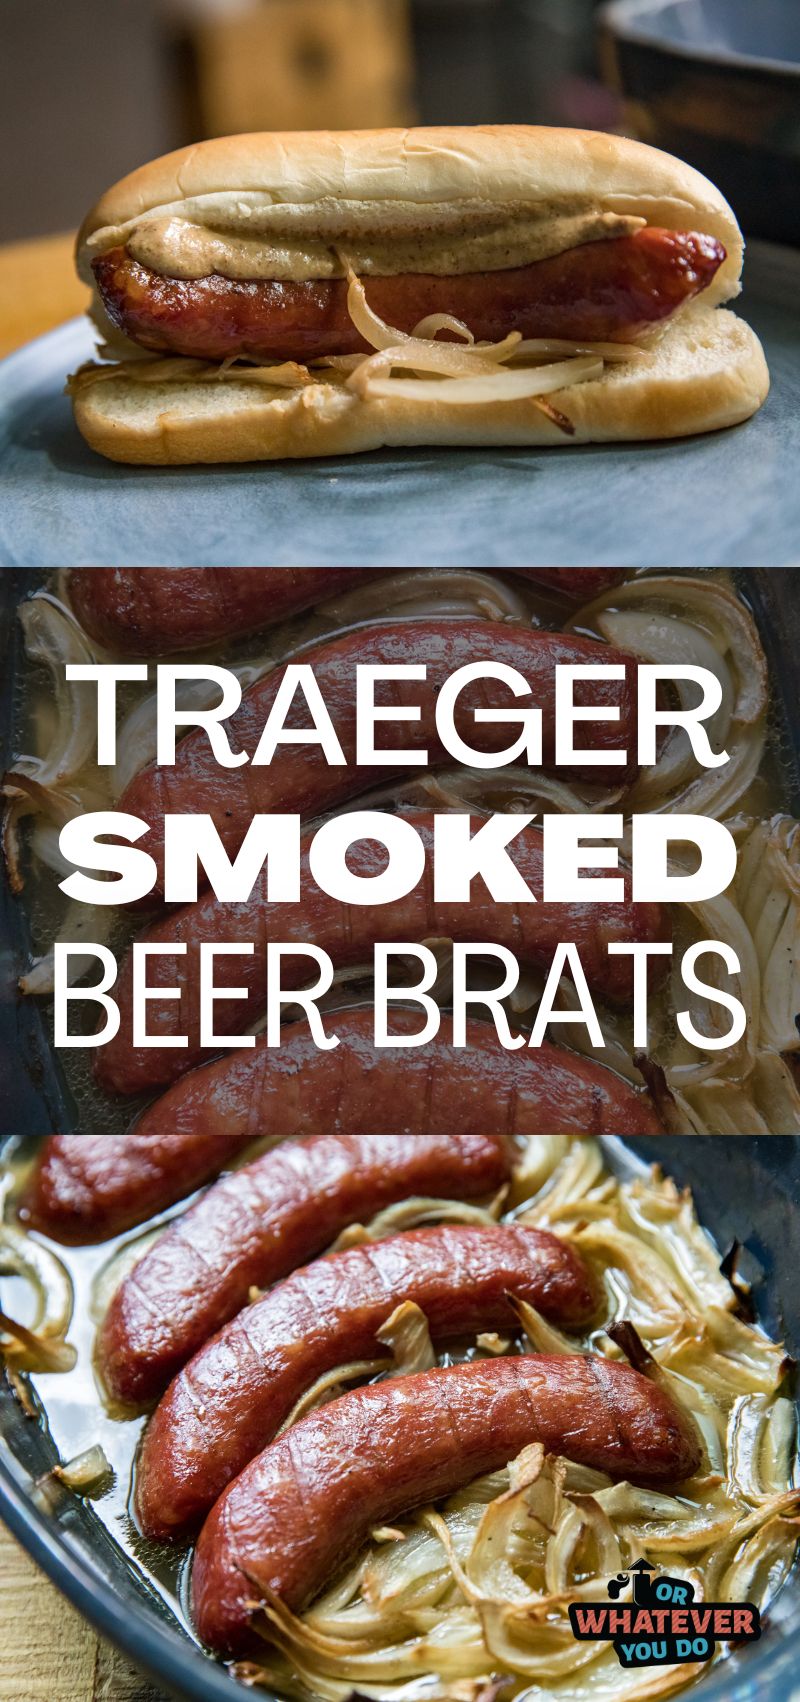 Traeger Smoked Beer Brats